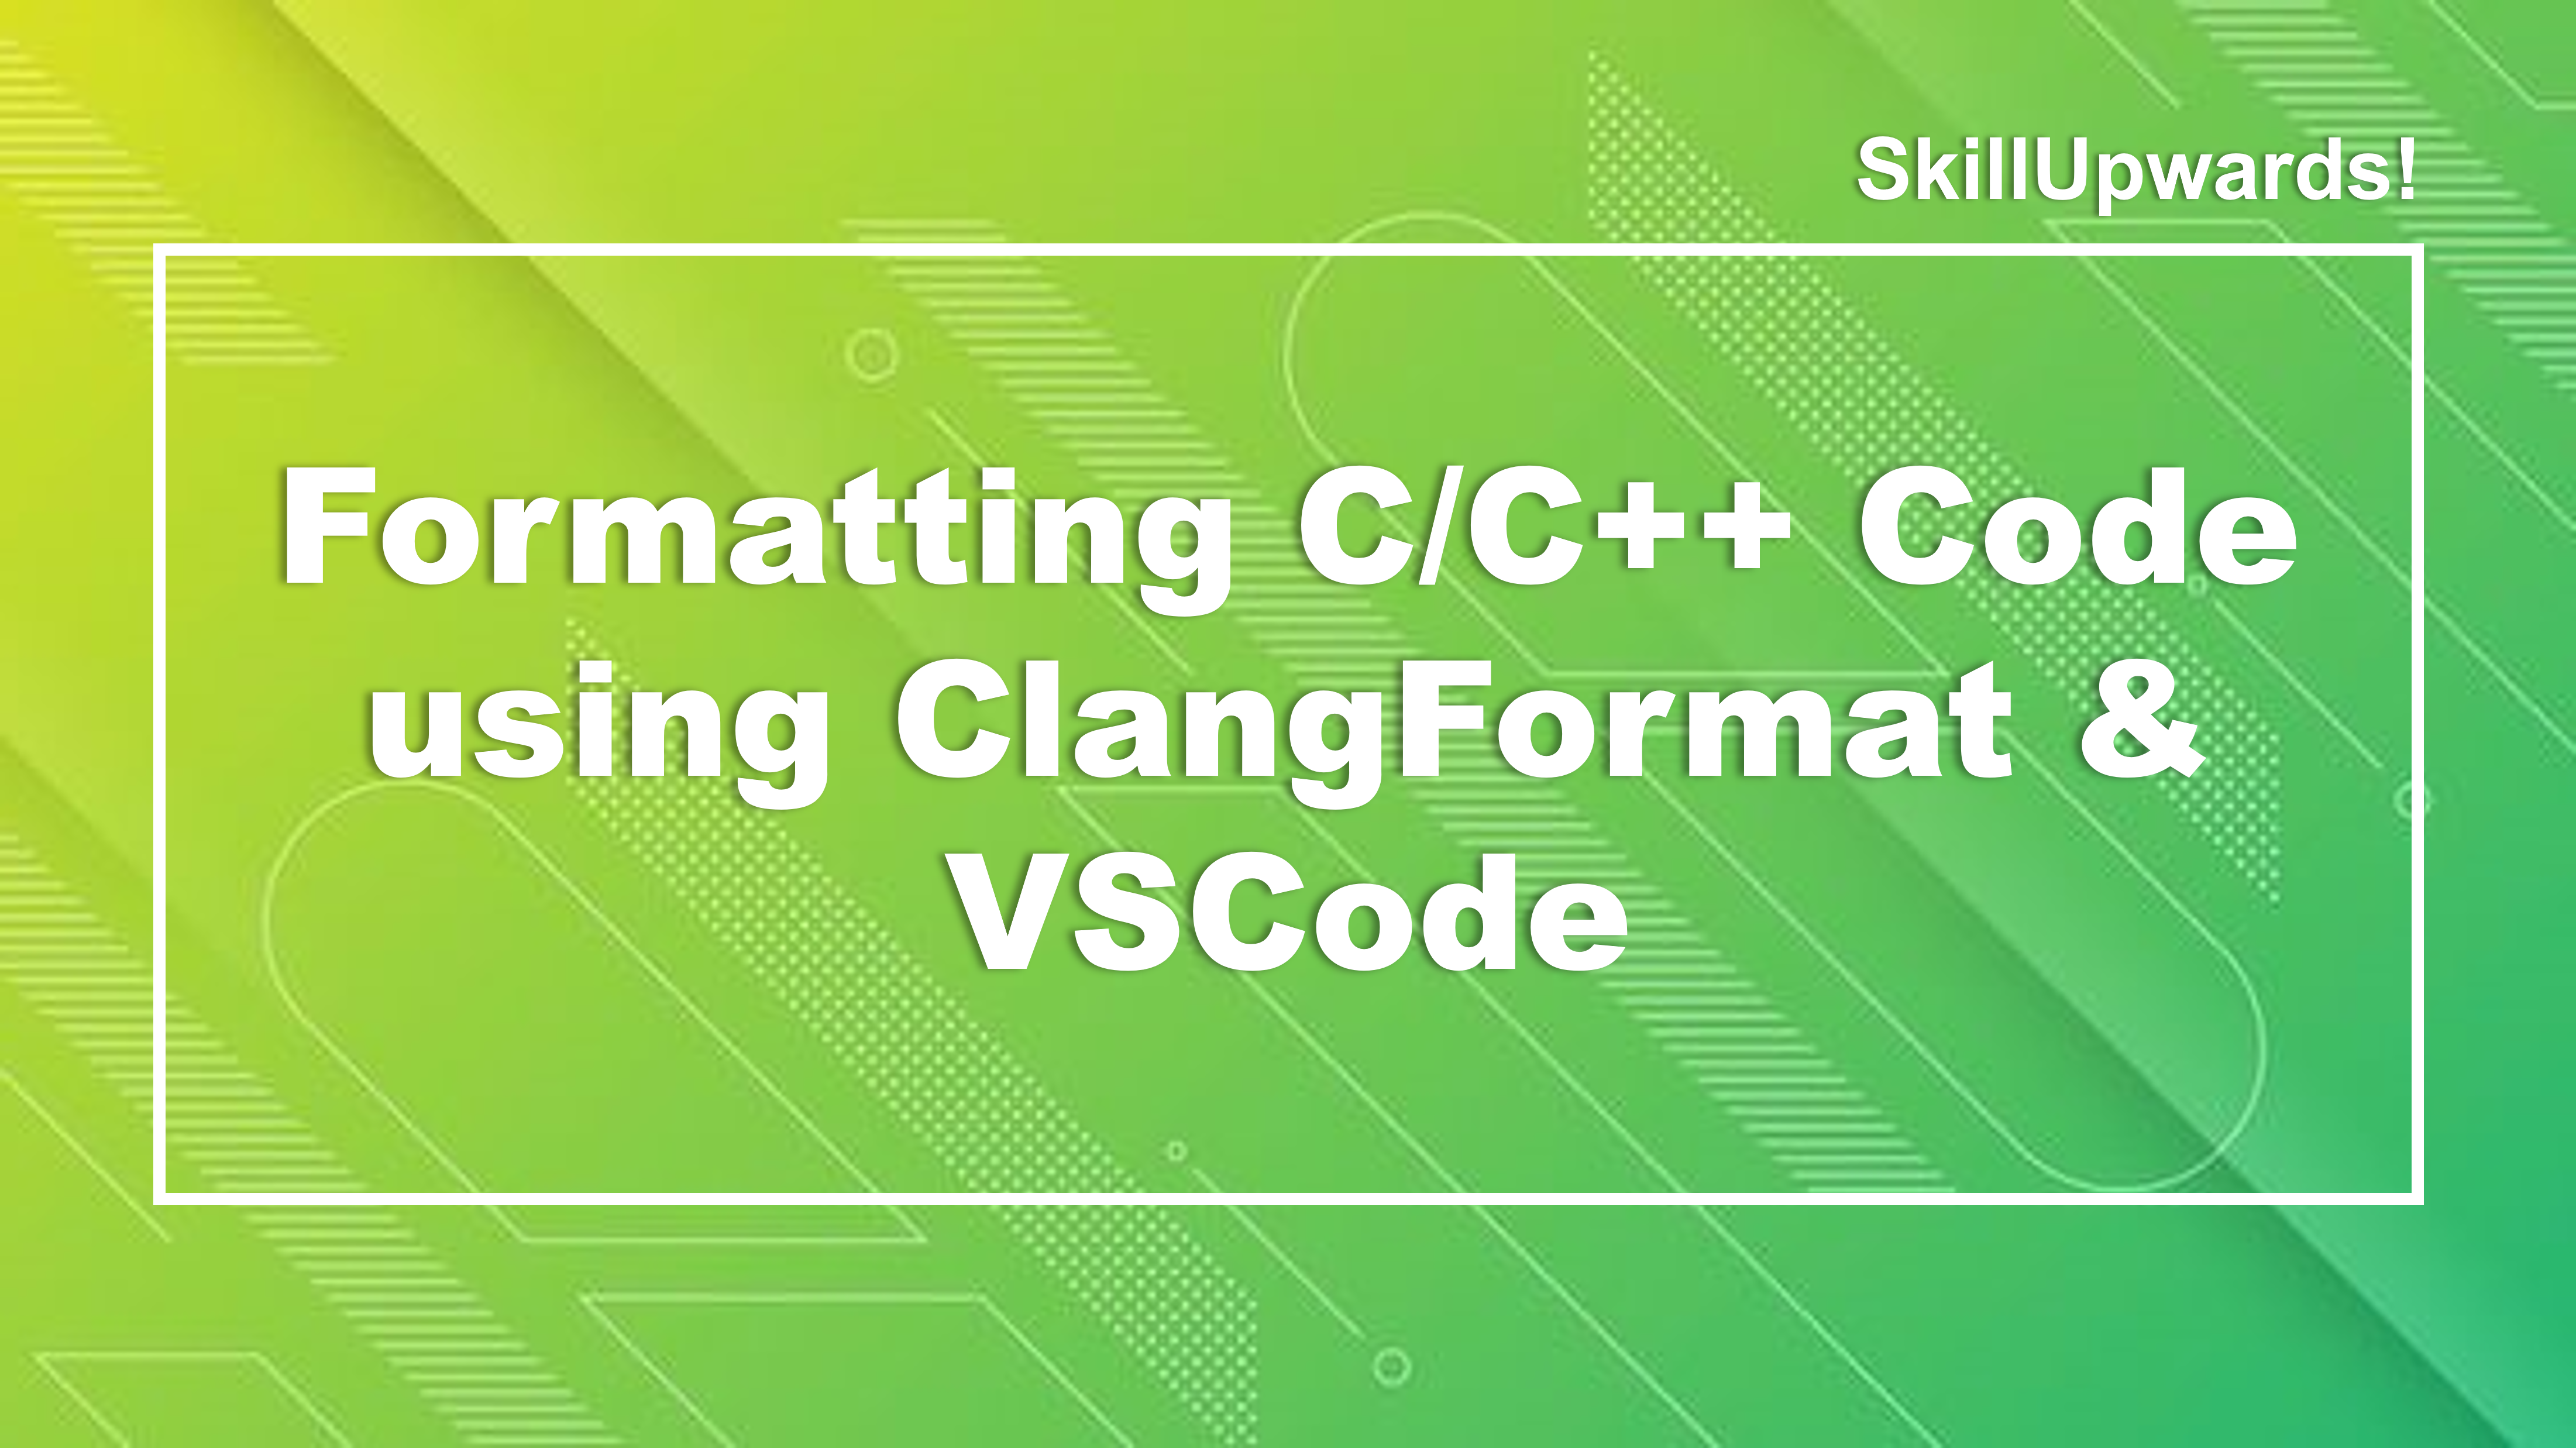 &quot;Formatting C/C++ Code using ClangFormat and VSCode&quot;